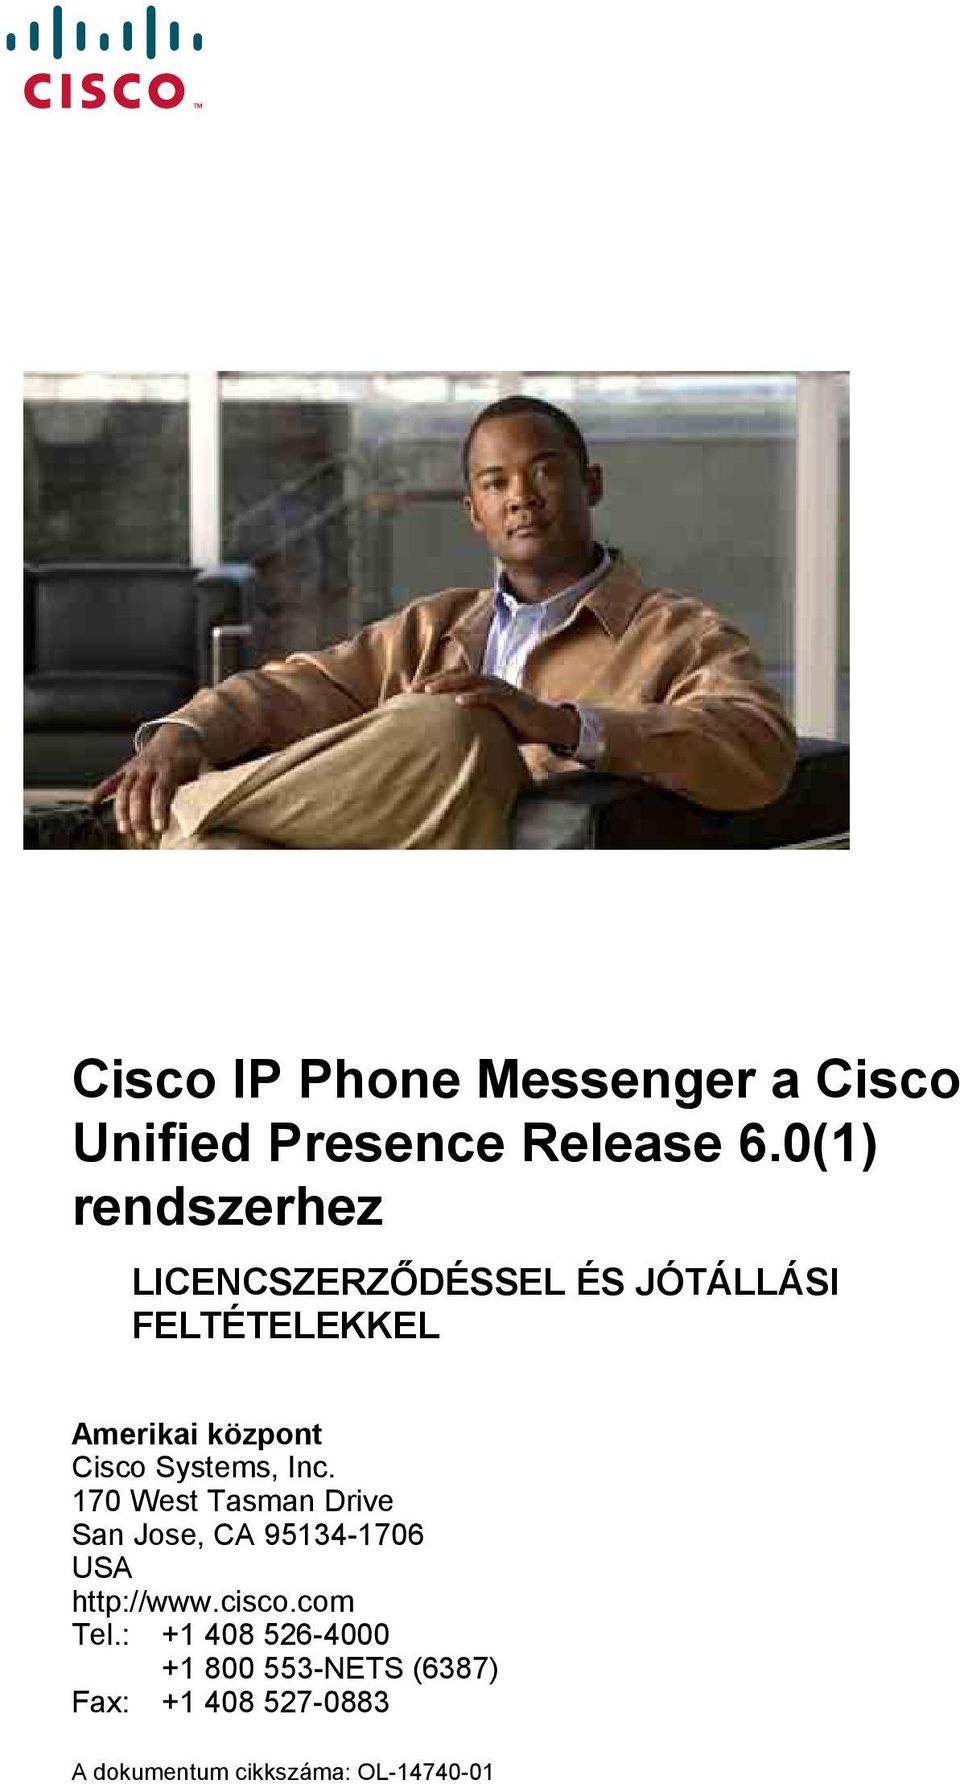 Cisco Systems, Inc. 170 West Tasman Drive San Jose, CA 95134-1706 USA http://www.